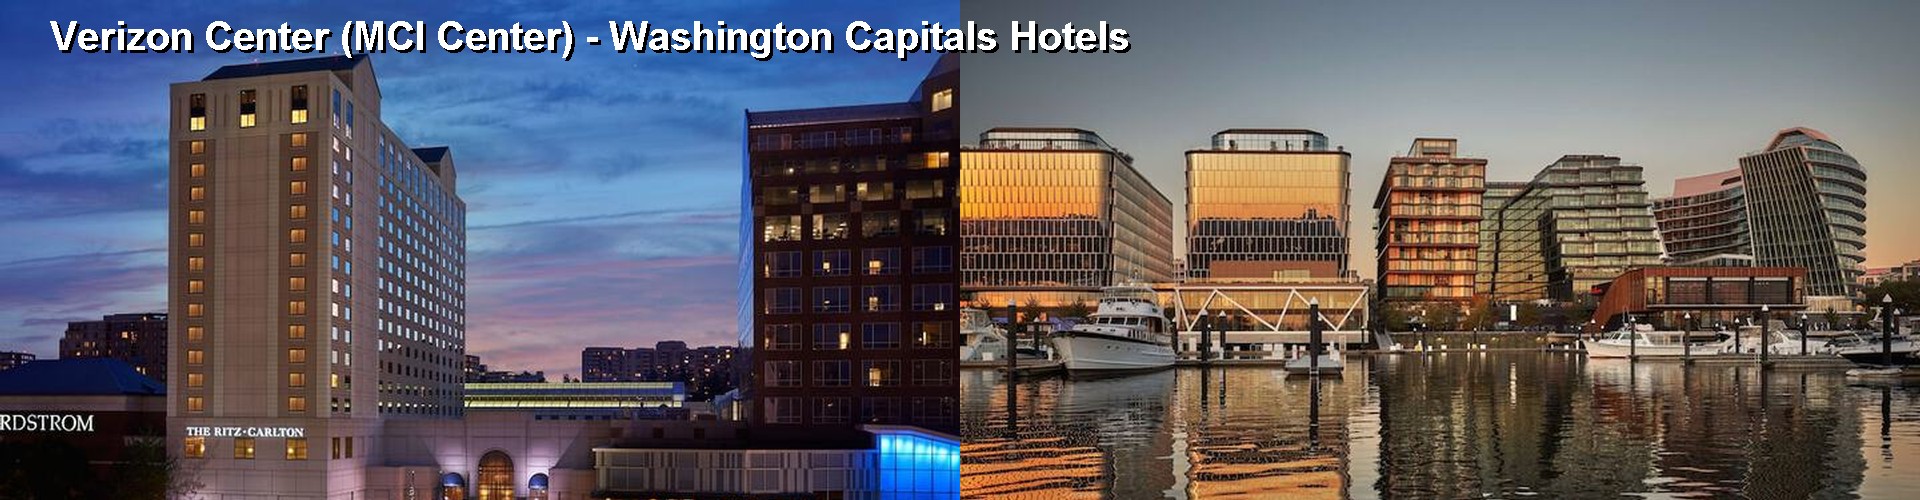 4 Best Hotels near Verizon Center (MCI Center) - Washington Capitals